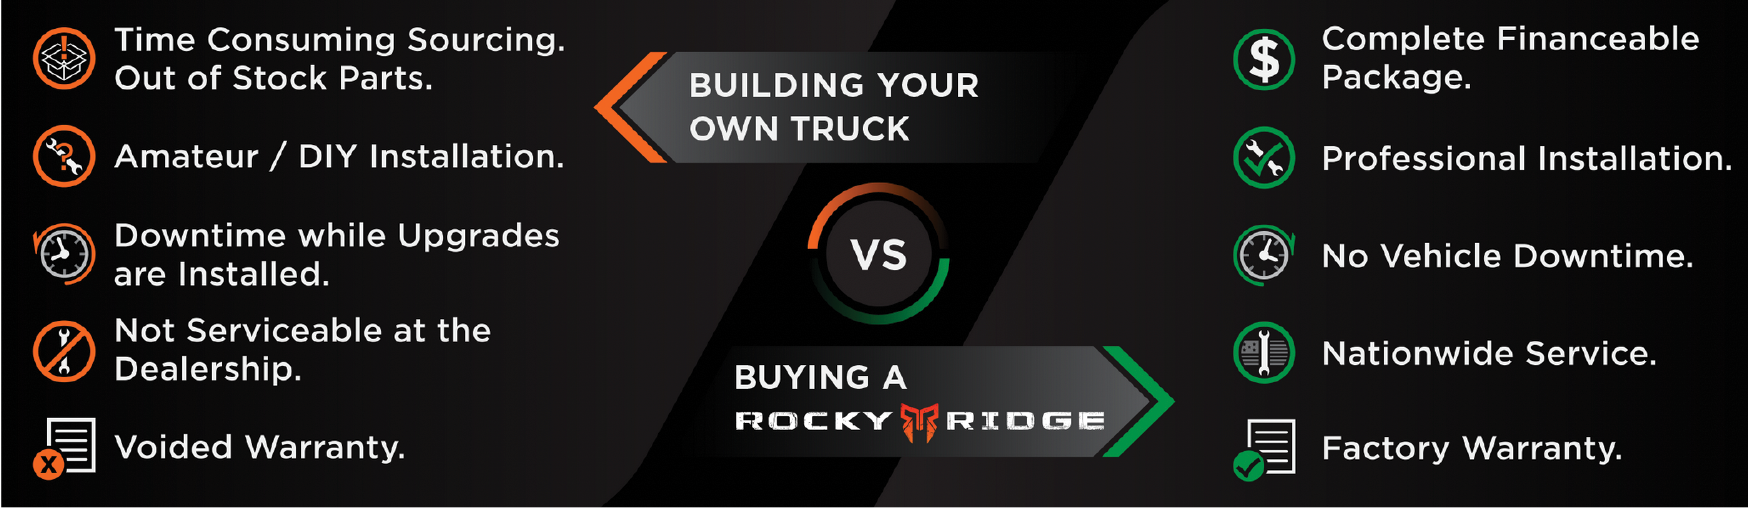 Advantages of buying a rocky ridge truck vs building a custom truck